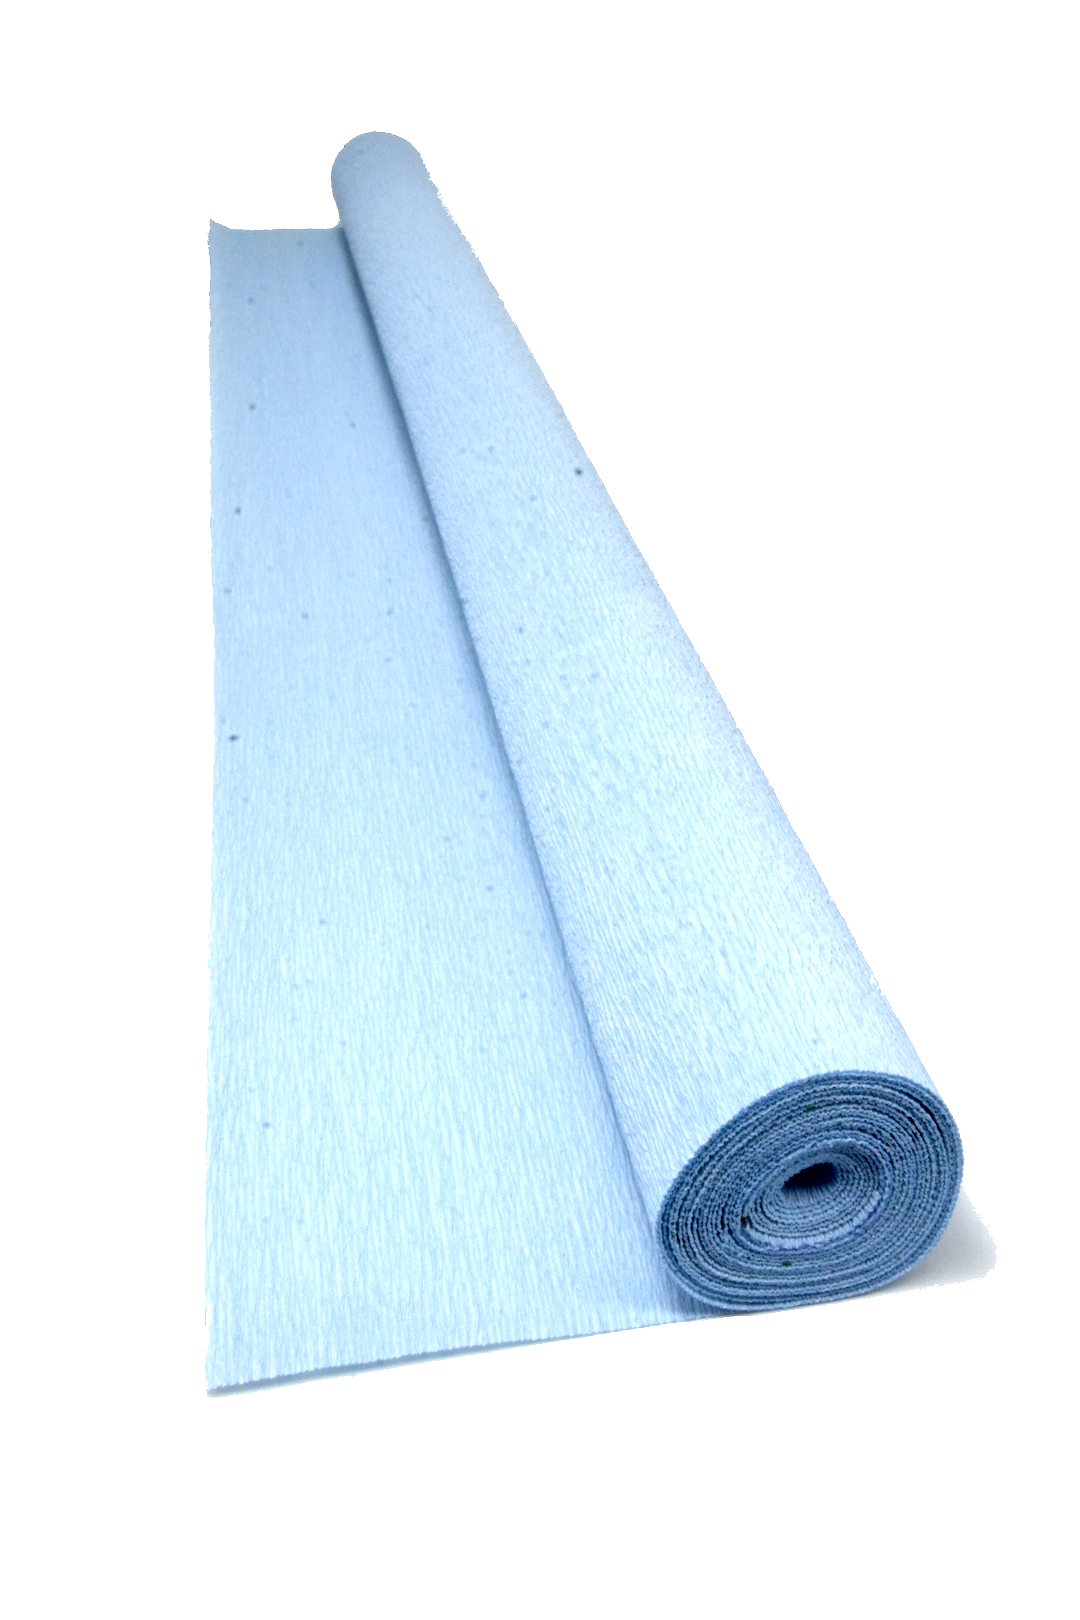 Crepe paper roll, 50 cm x 250 cm, 31 g / m²